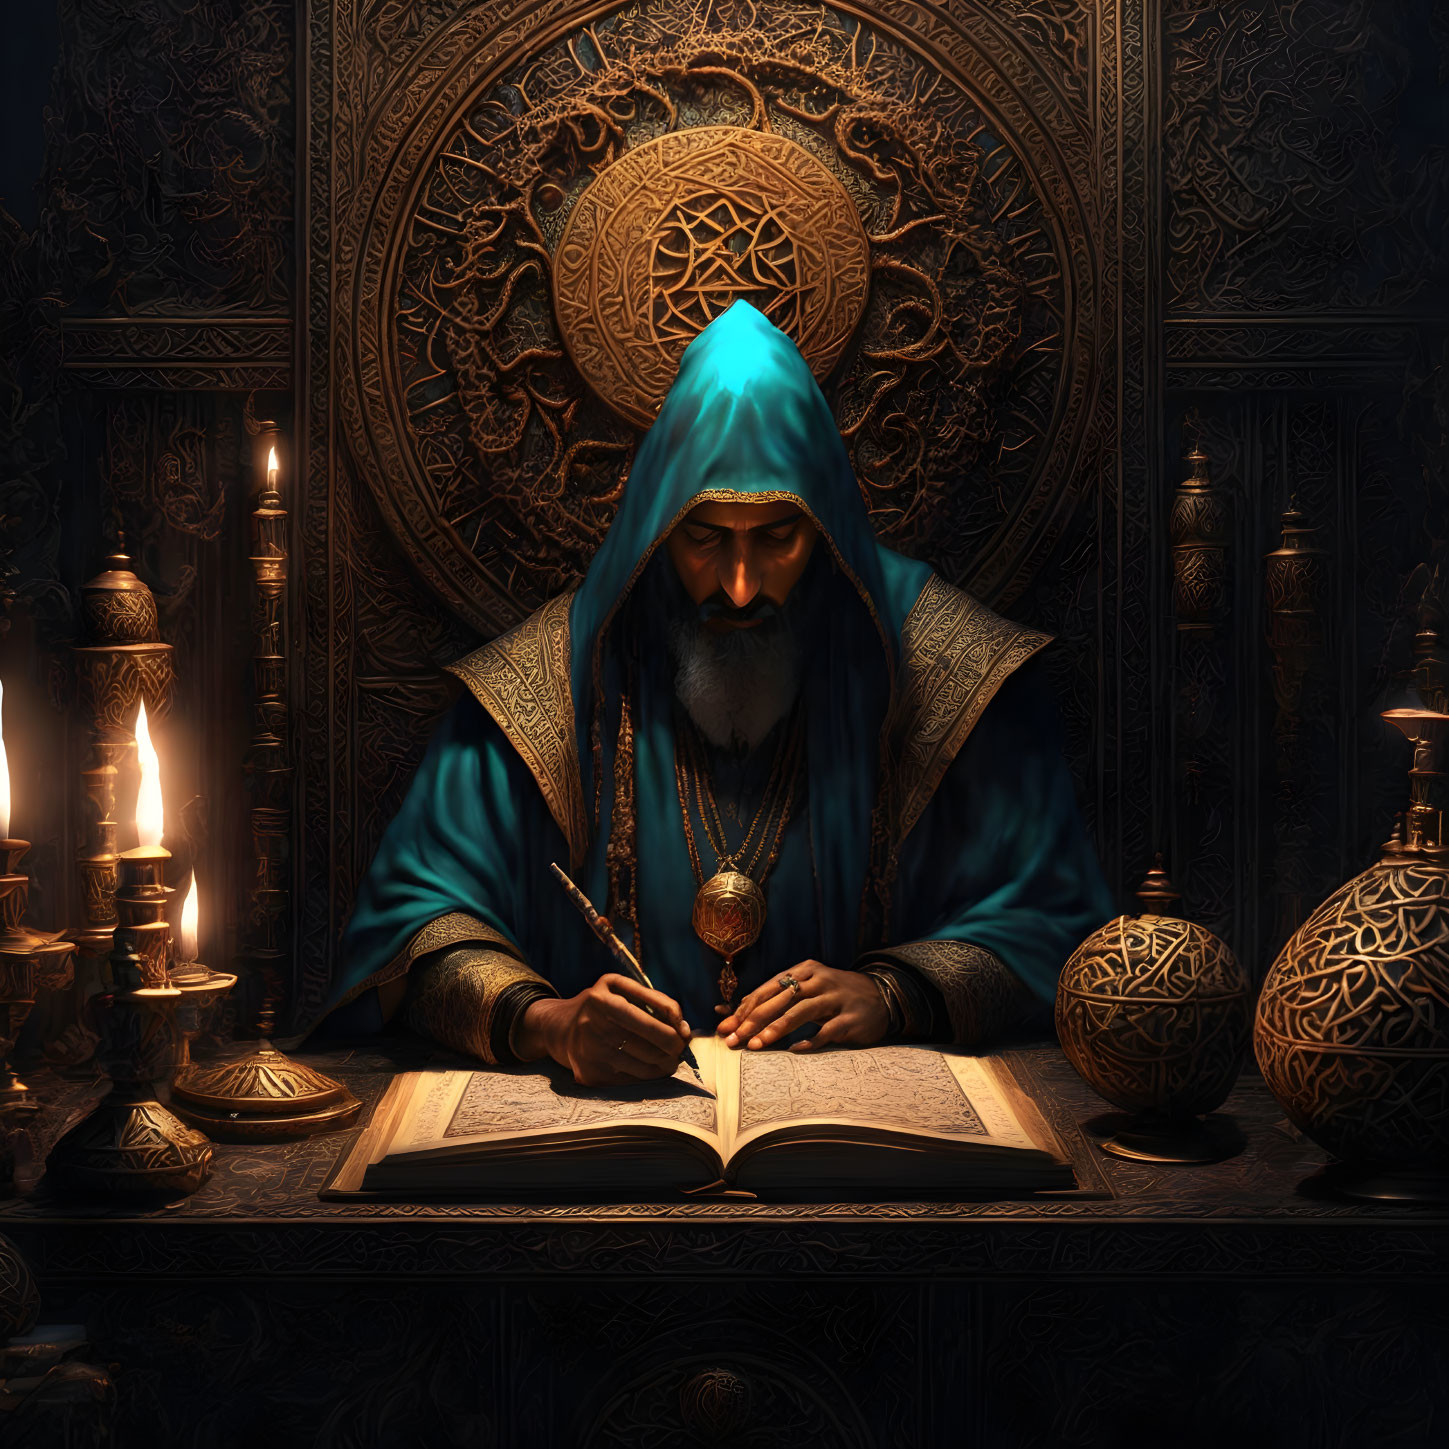 Abdul Alhazred writing the Kitab al-Azif